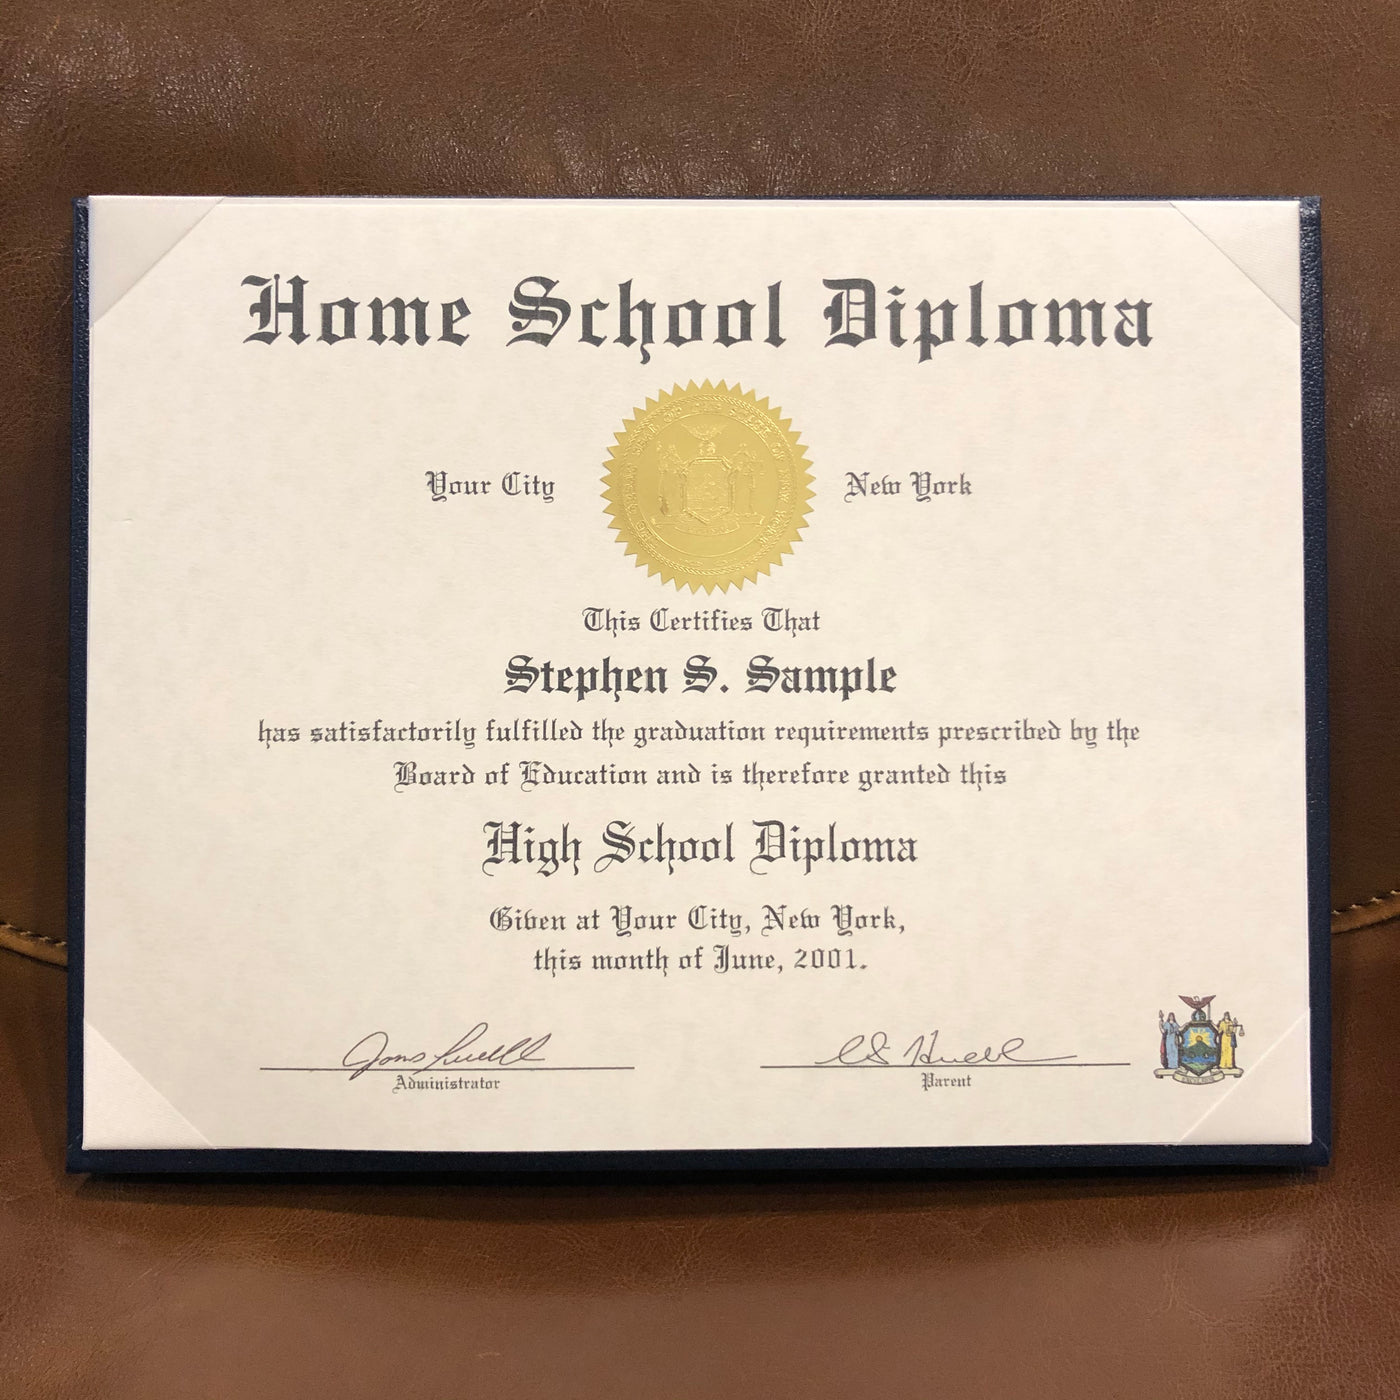 Homeschool Diploma Layout 1